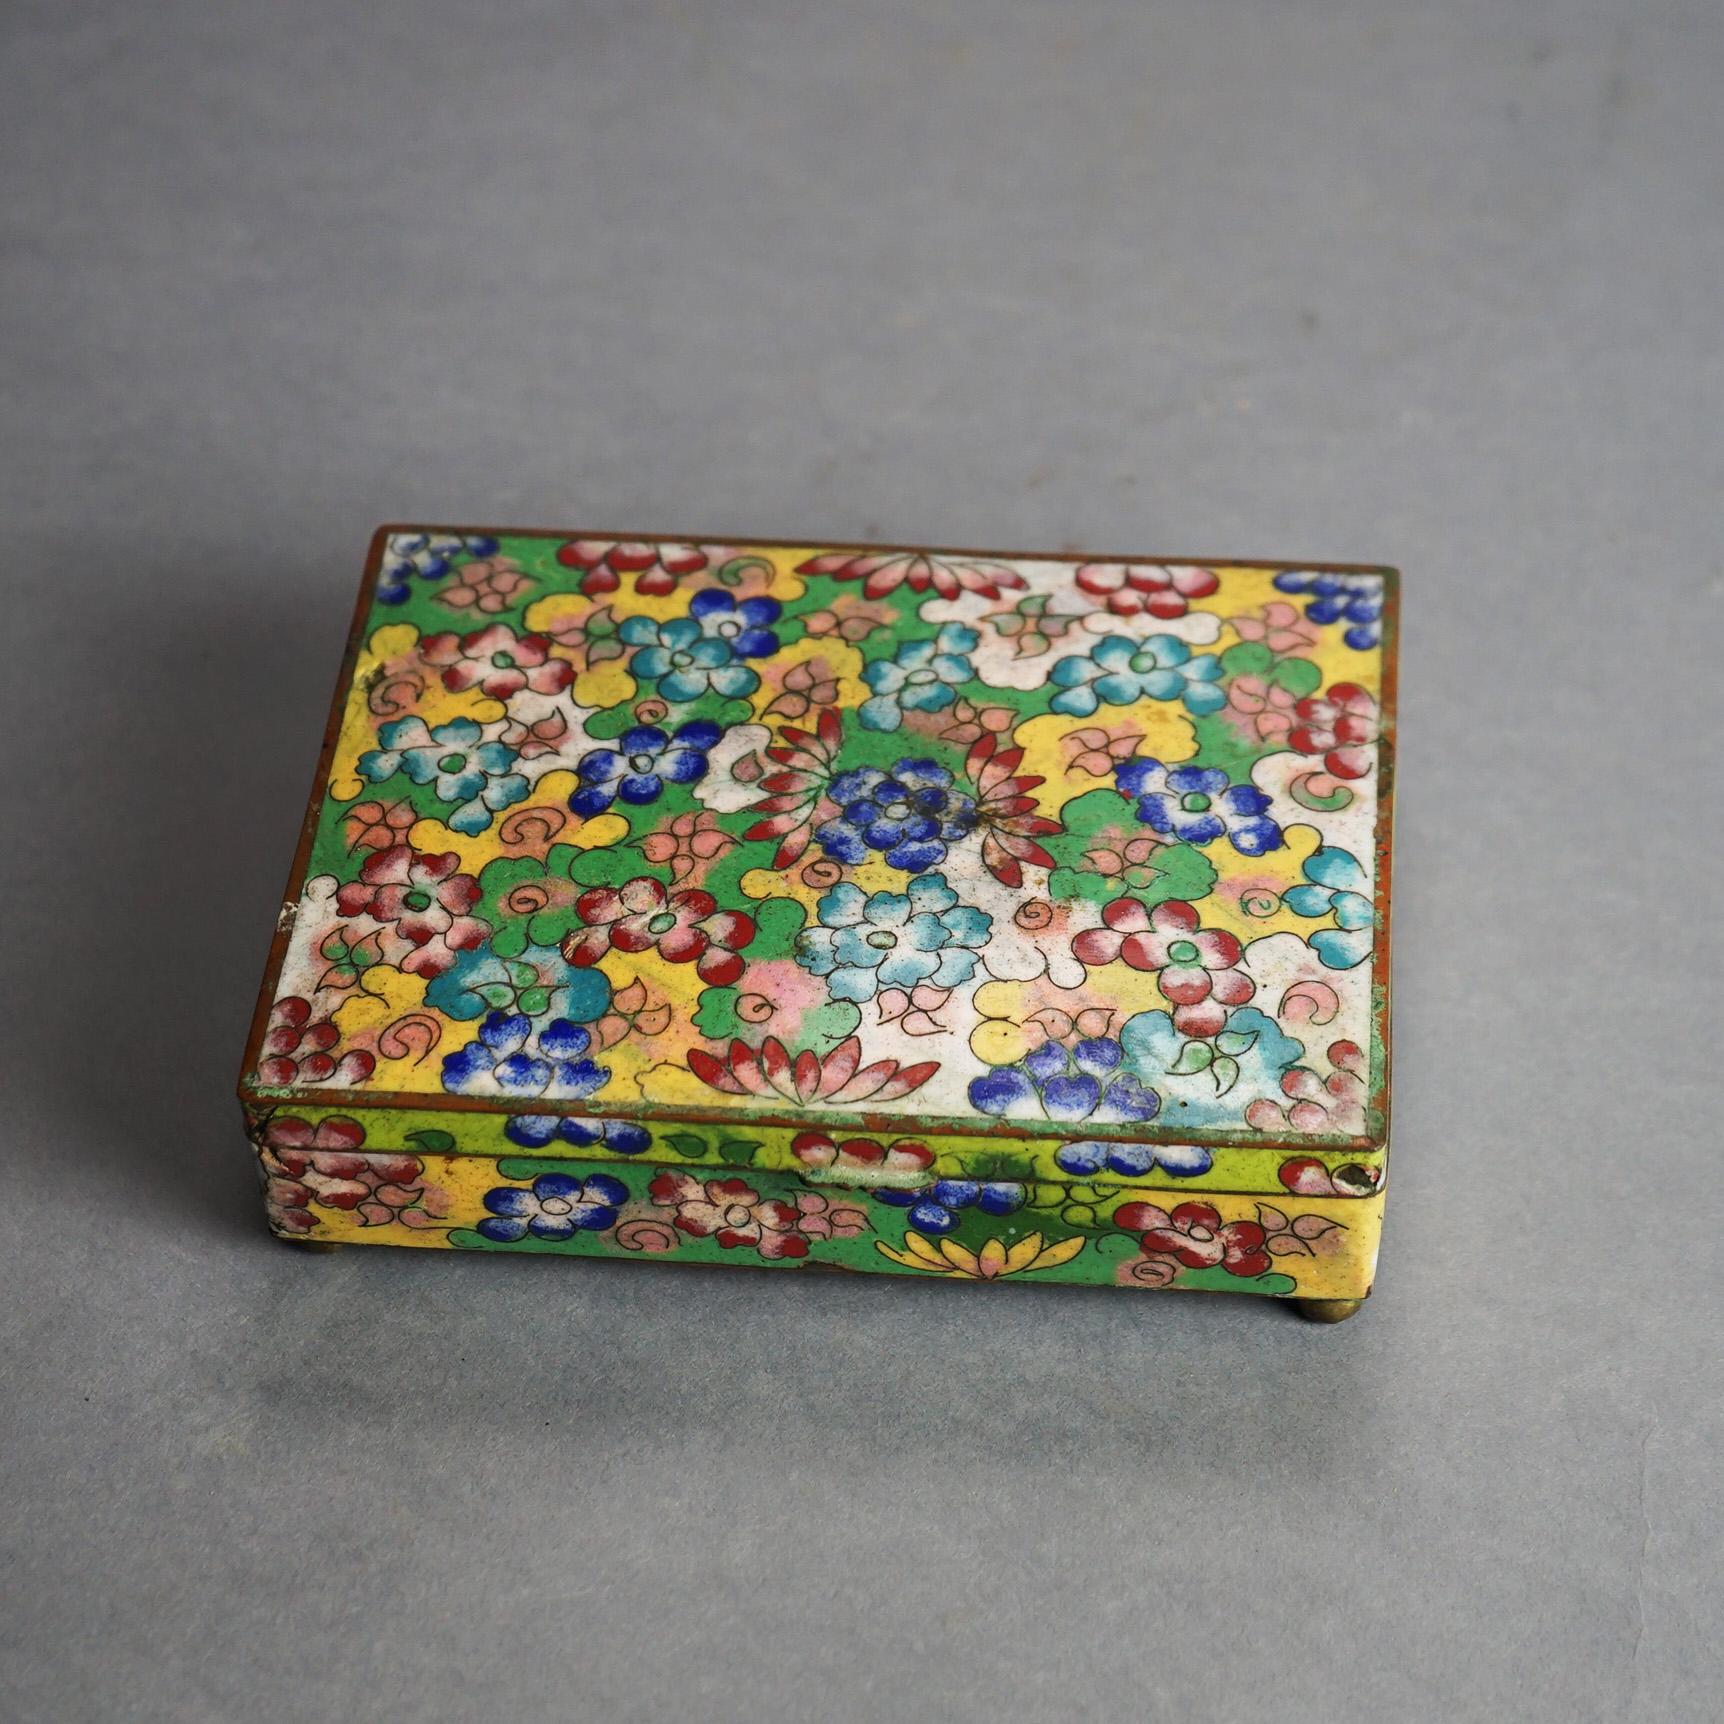 Four Antique Miscellaneous Chinese Cloisonne Enameled Items C1920

Measures - 3